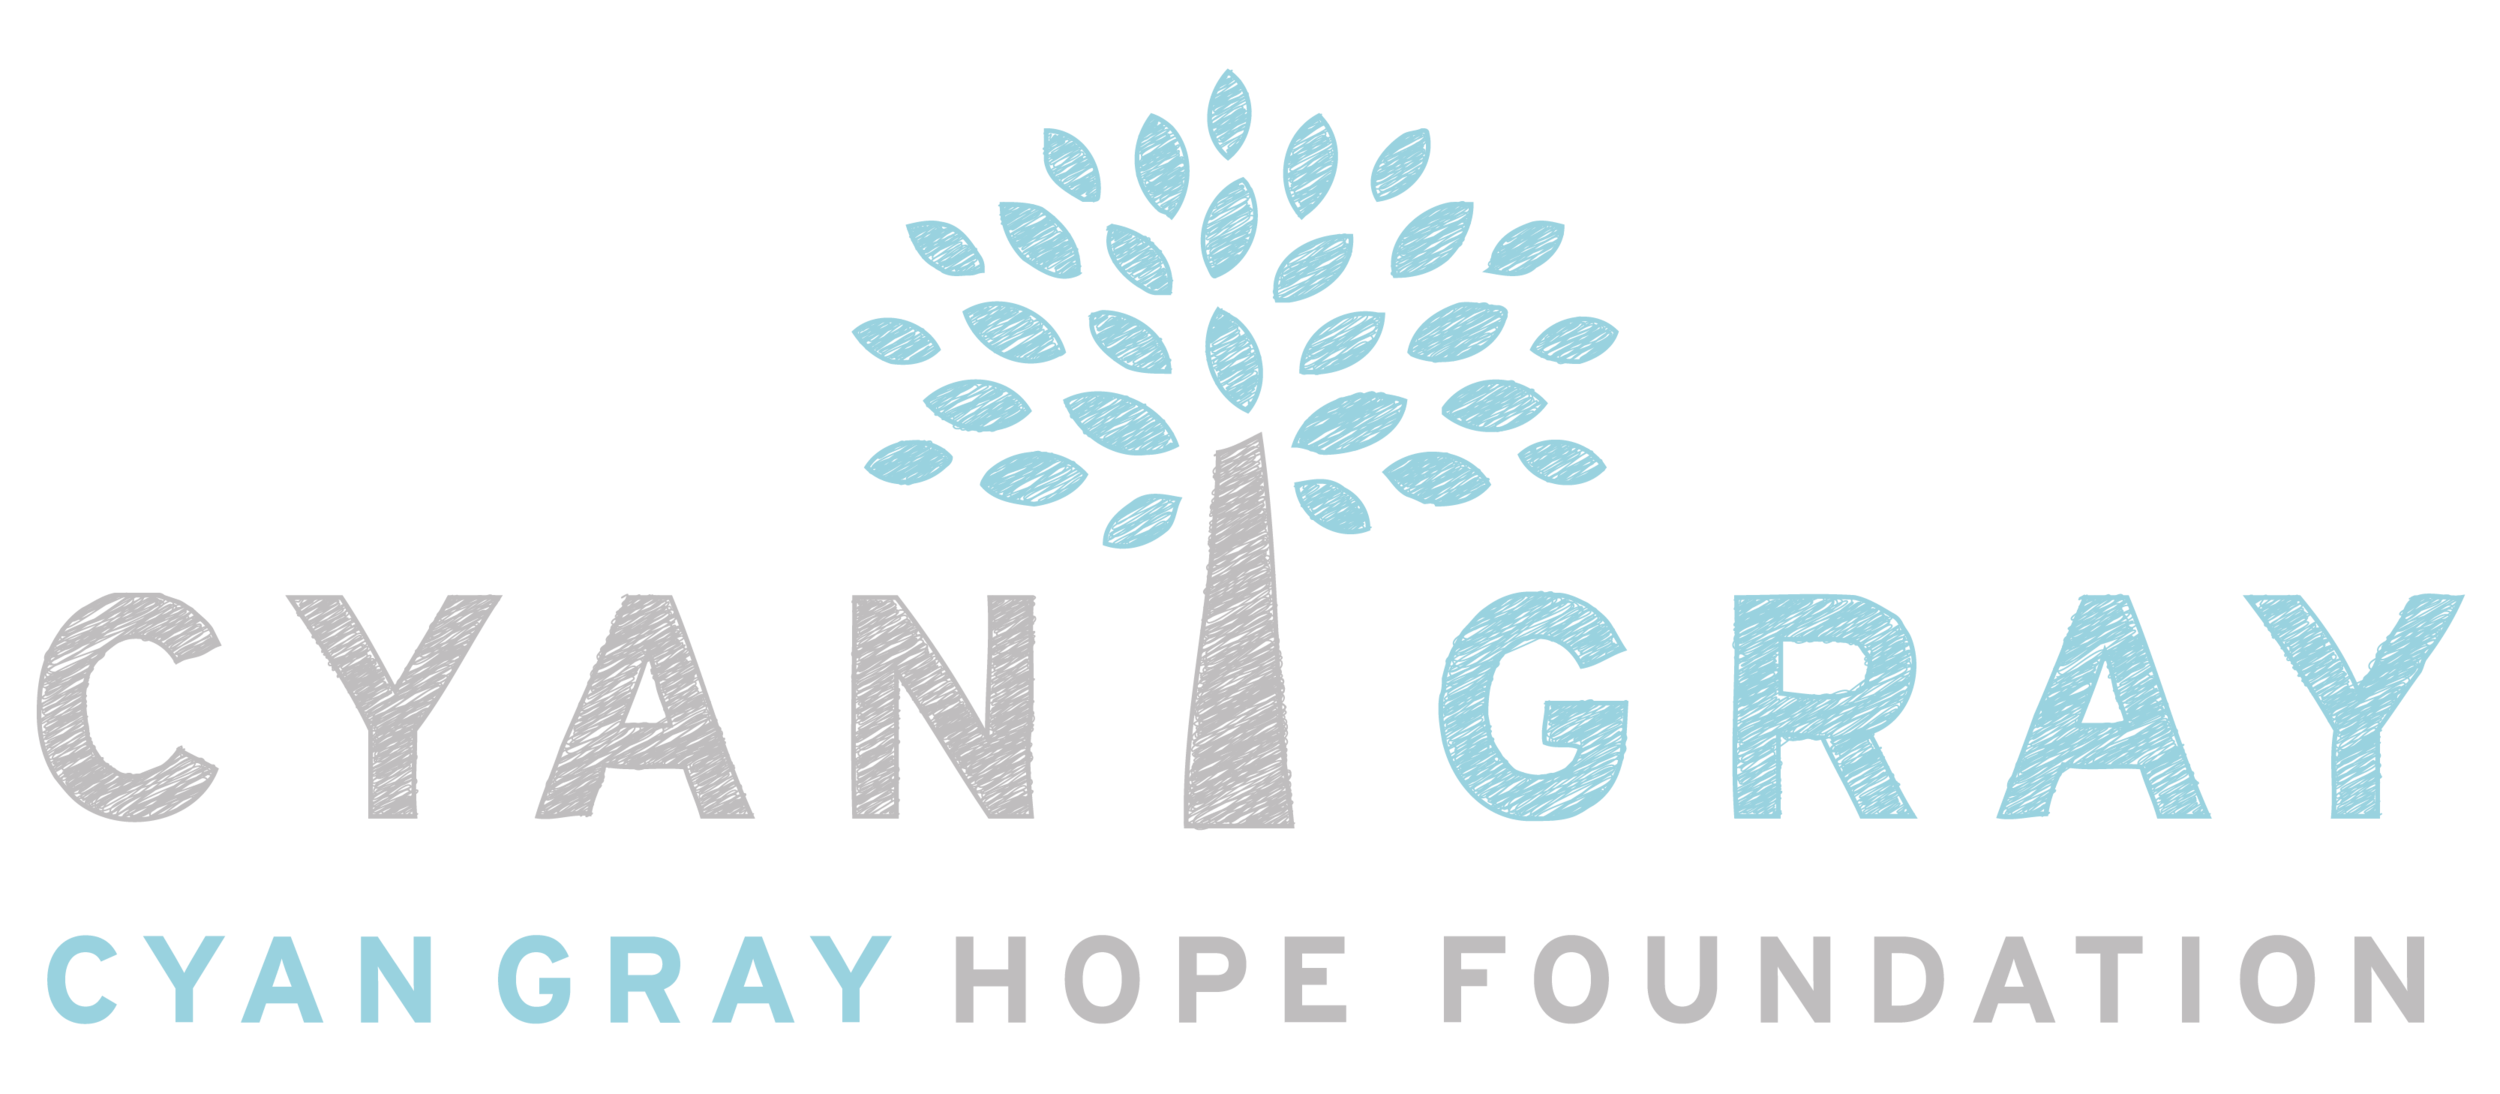 The Cyan Gray Hope Foundation